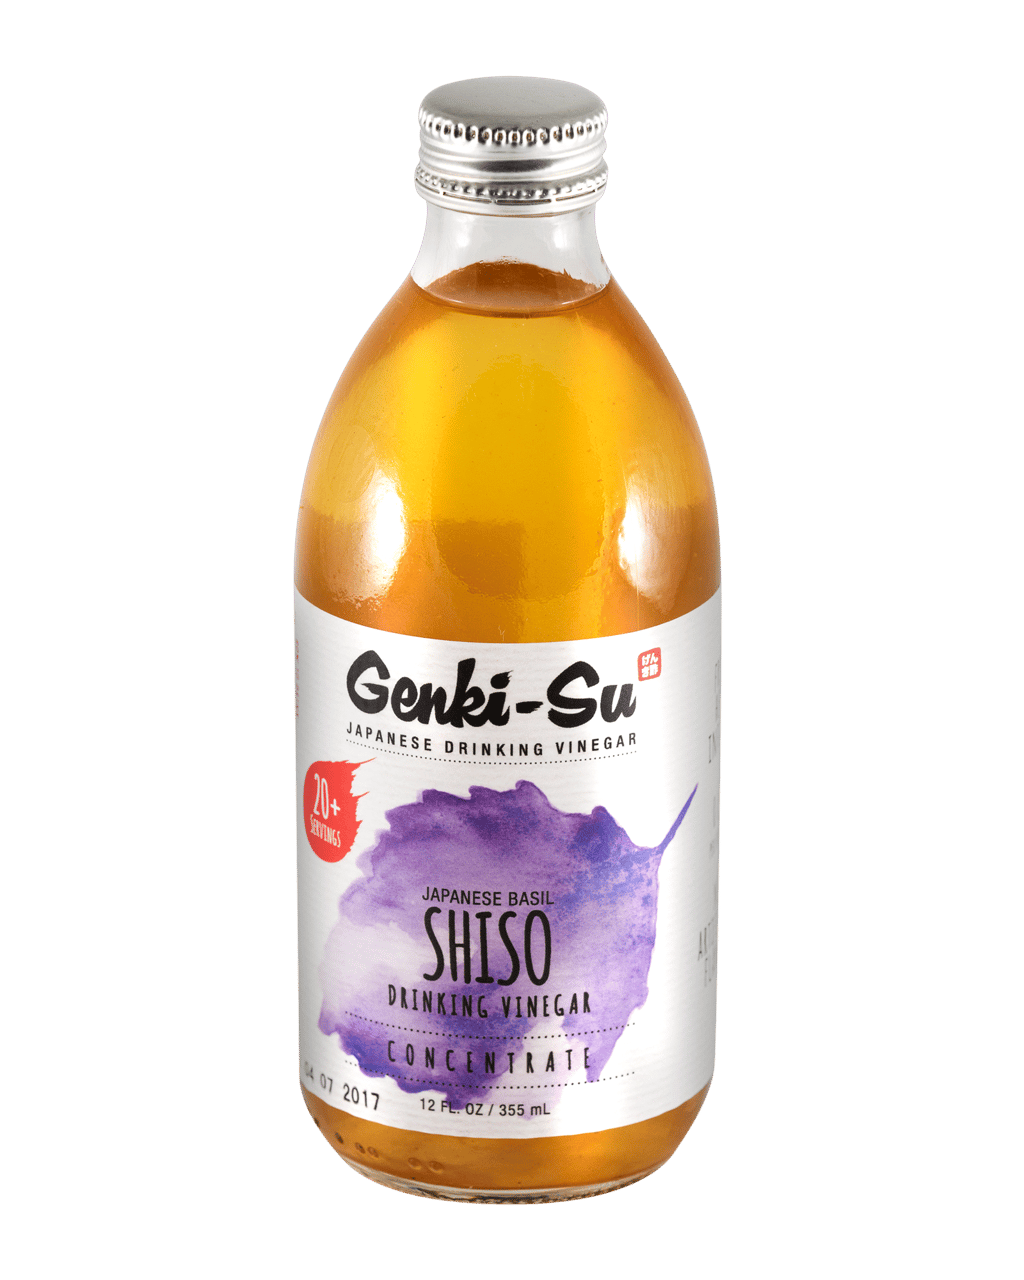 Buy Genki-Su Shiso Japanese Drinking Vinegar 355mL | Dan Murphy's Delivers